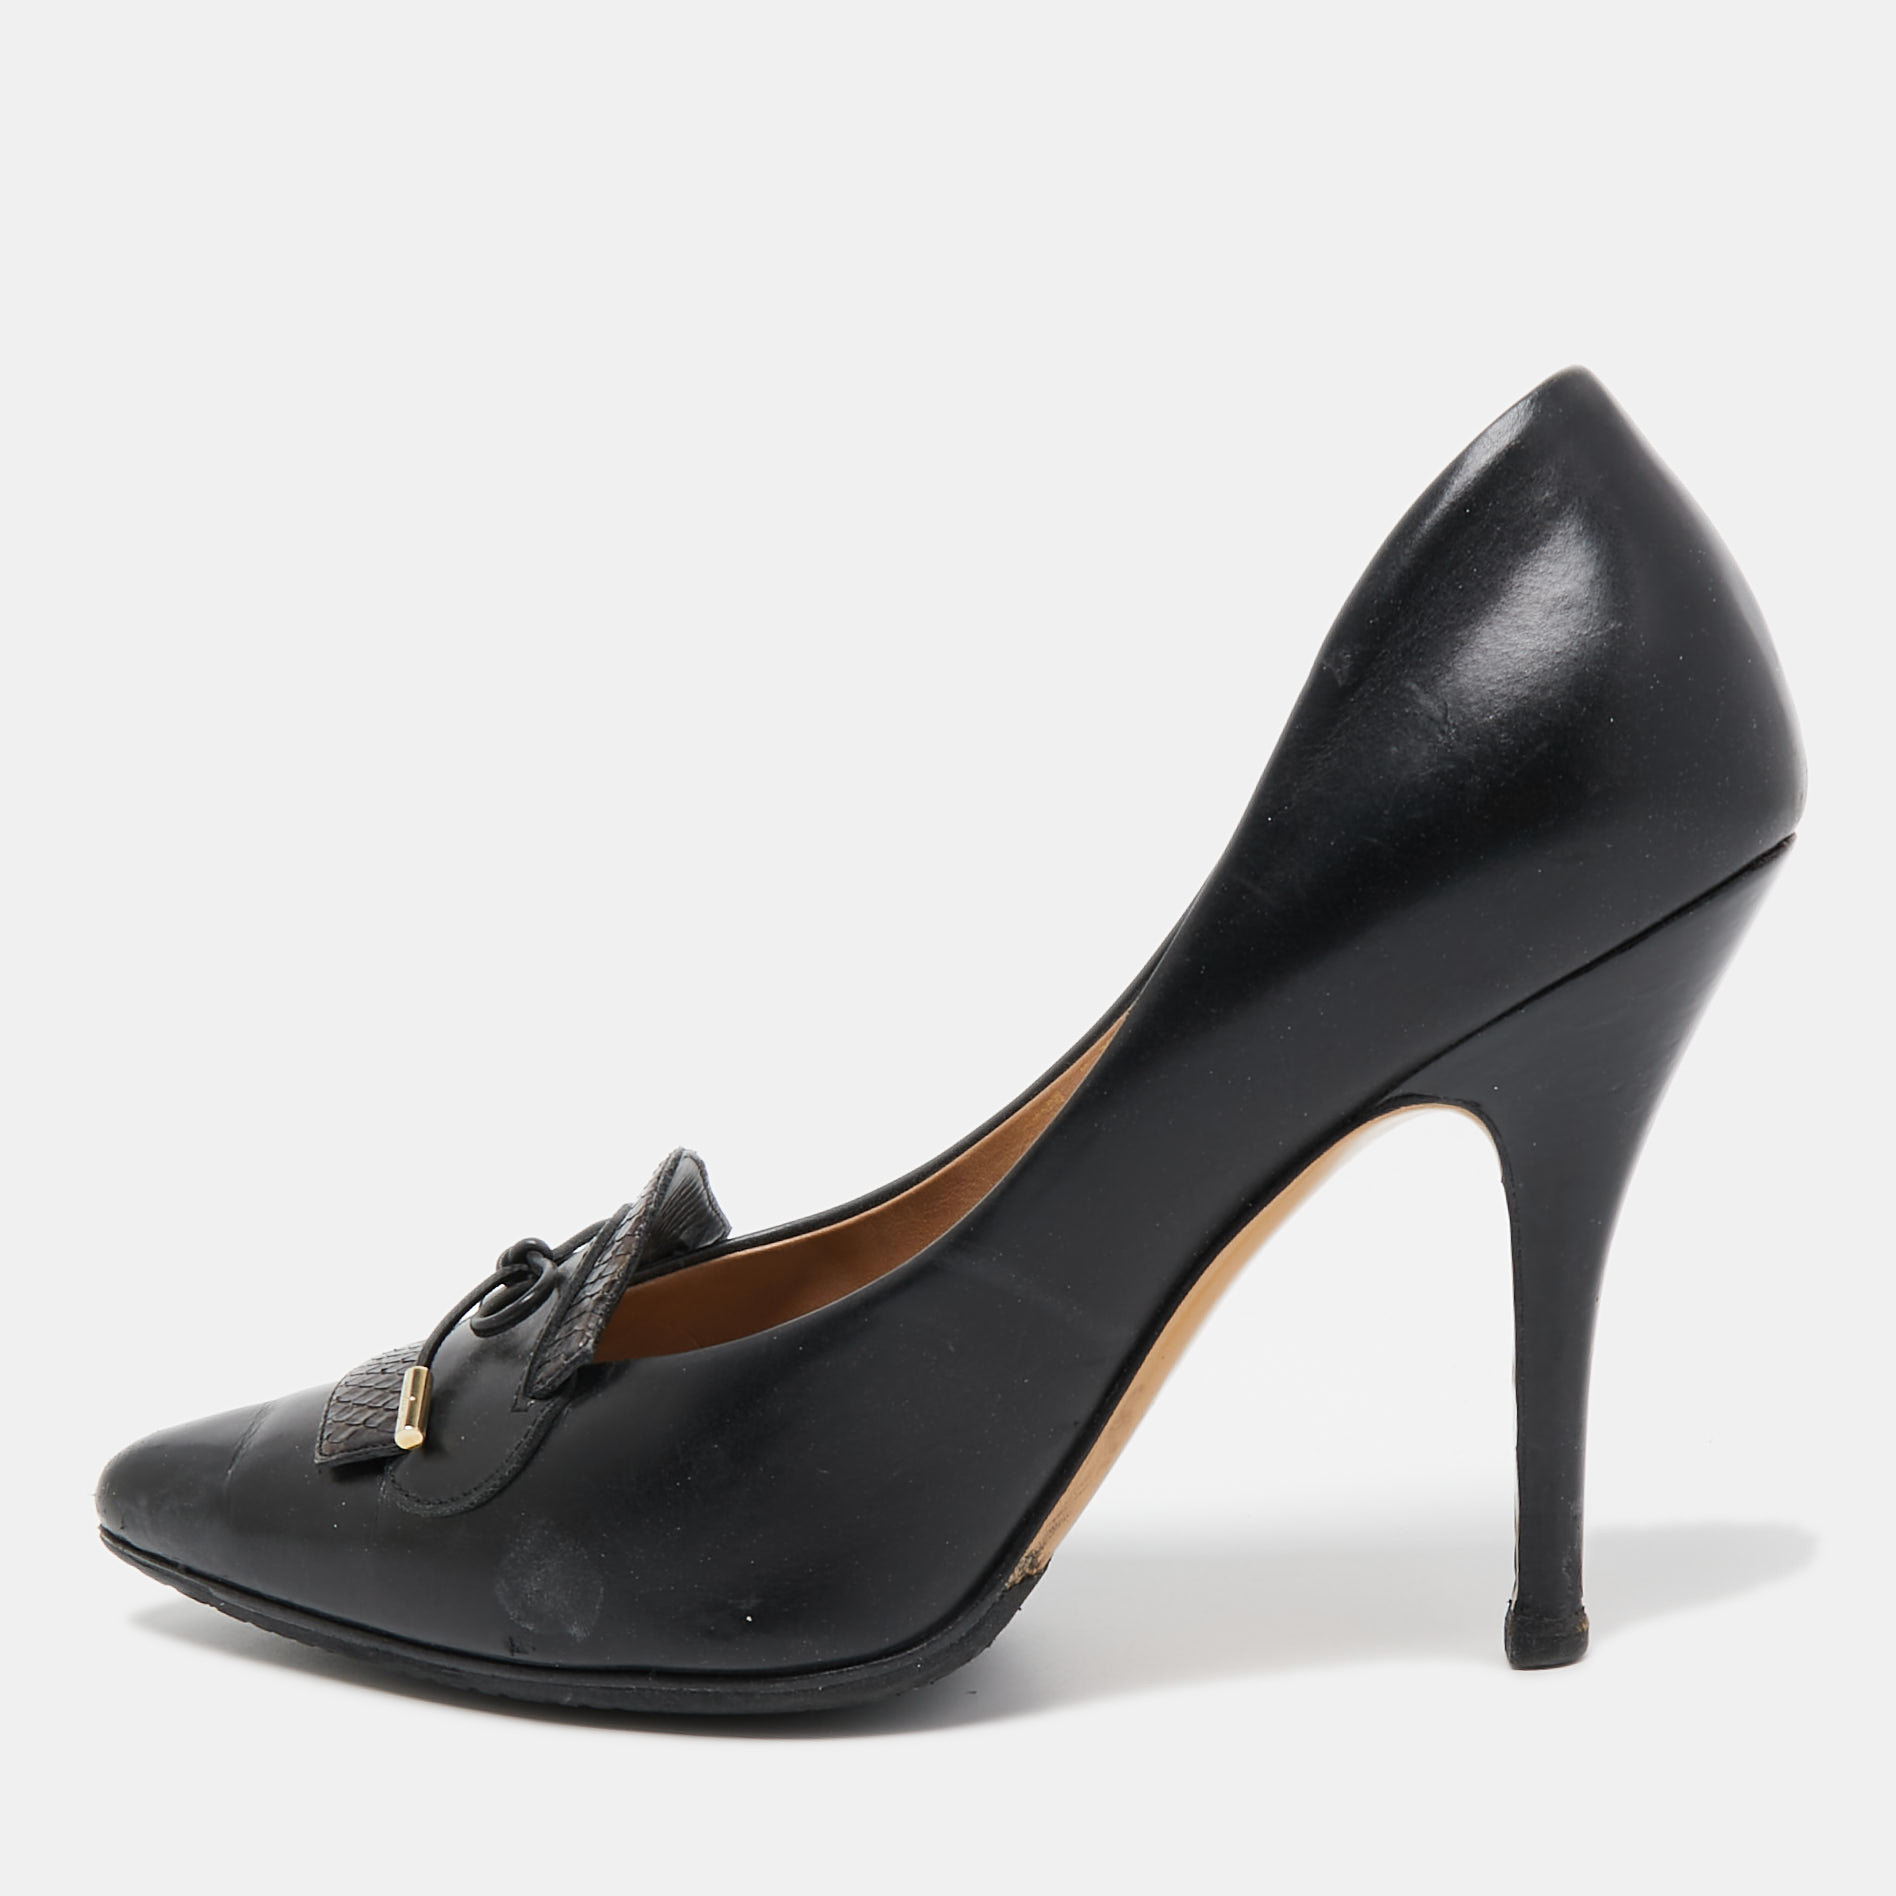 Salvatore ferragamo black leather pointed toe loafer pumps size 40